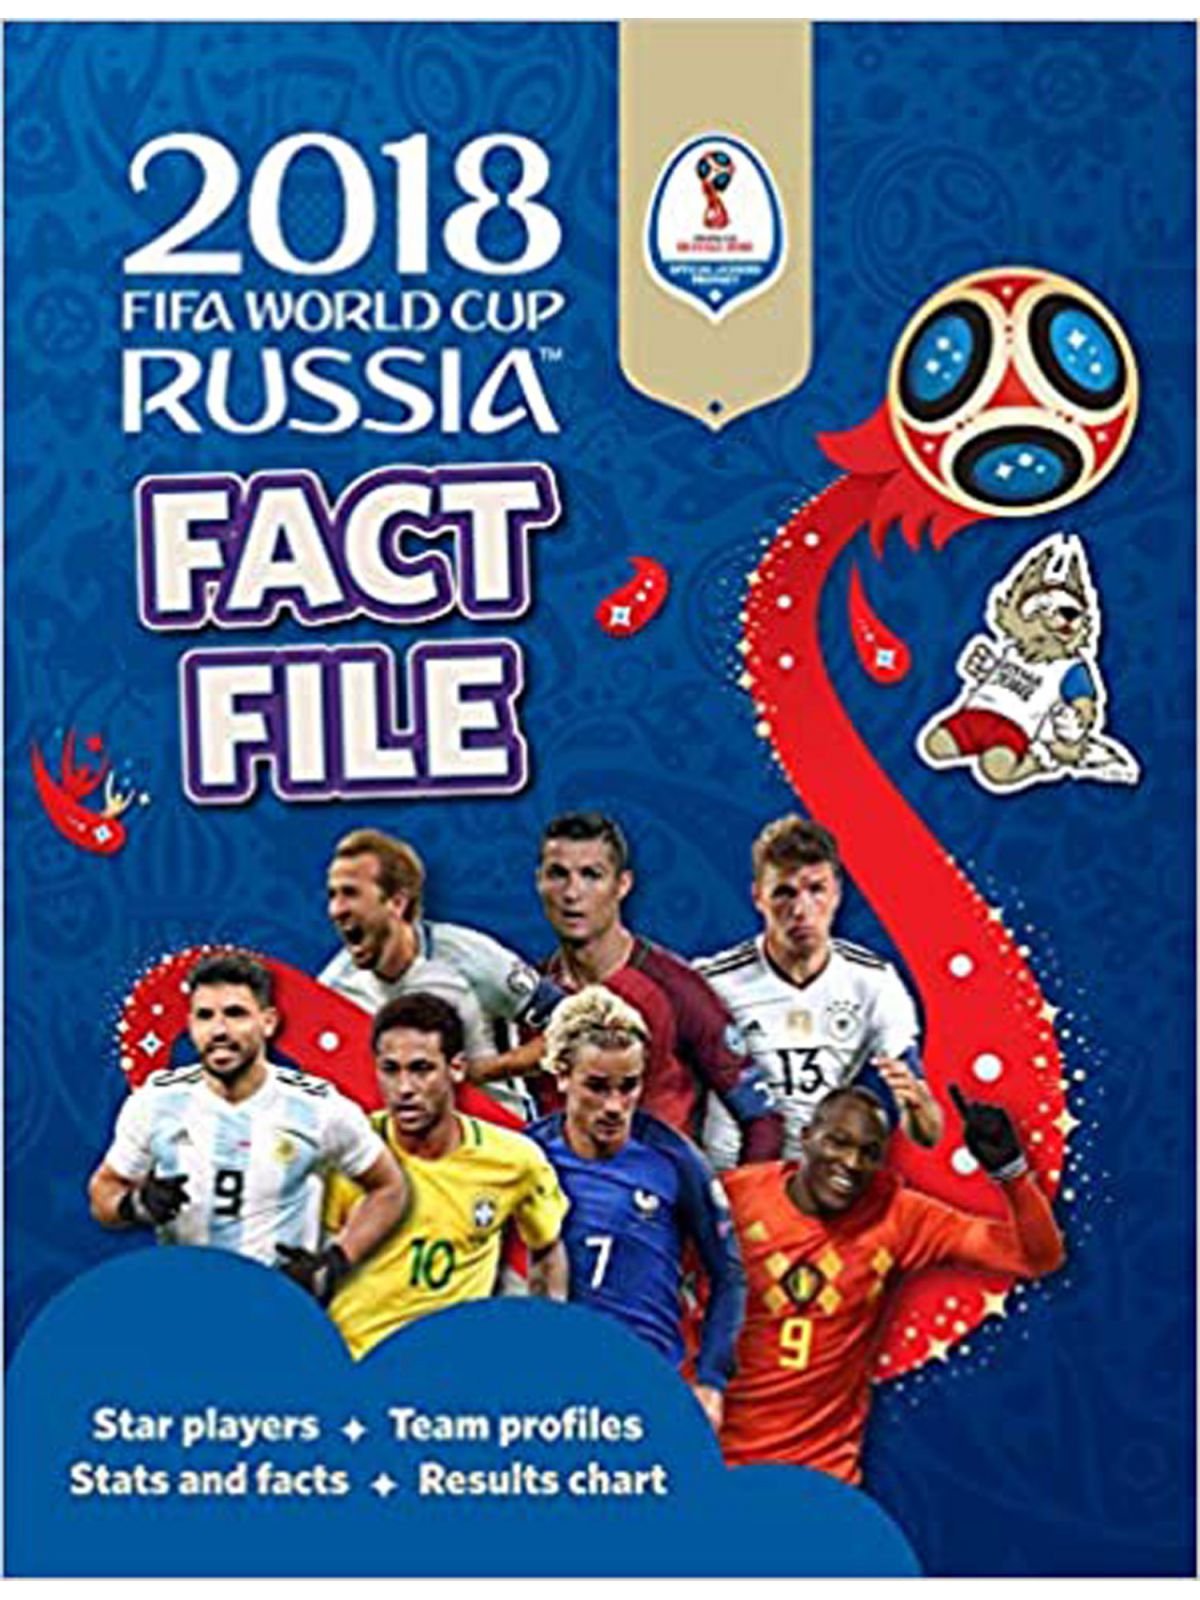 2018 FIFA WORLD CUP RUSSIA FACT FILE  Купить Книгу на Английском